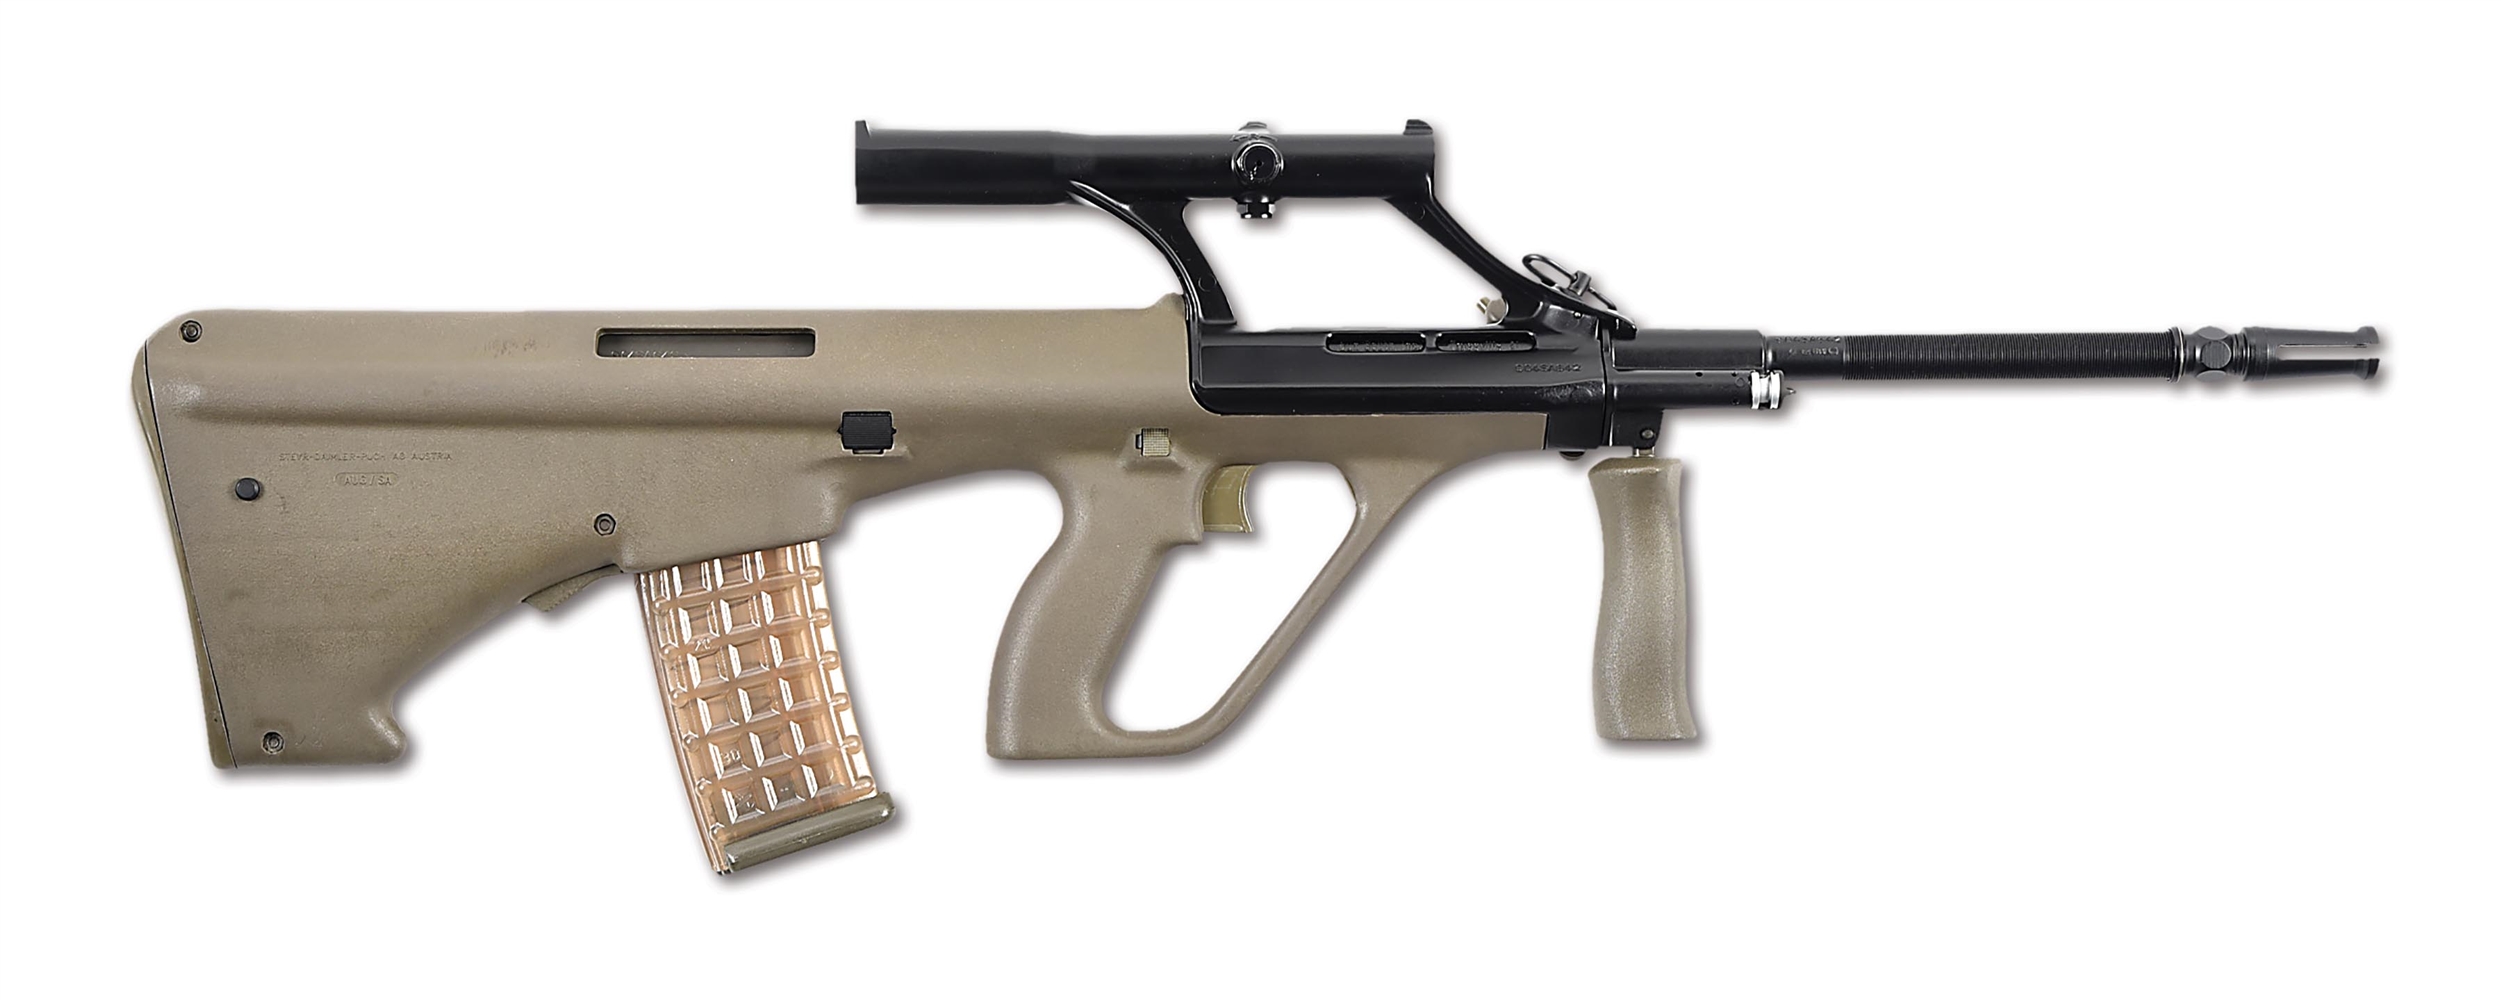 (N) QUALIFIED MFG AUTO-SEAR PACK MACHINE GUN IN HIGH CONDITION STEYR AUG HOST GUN (FULLY TRANSFERABLE).